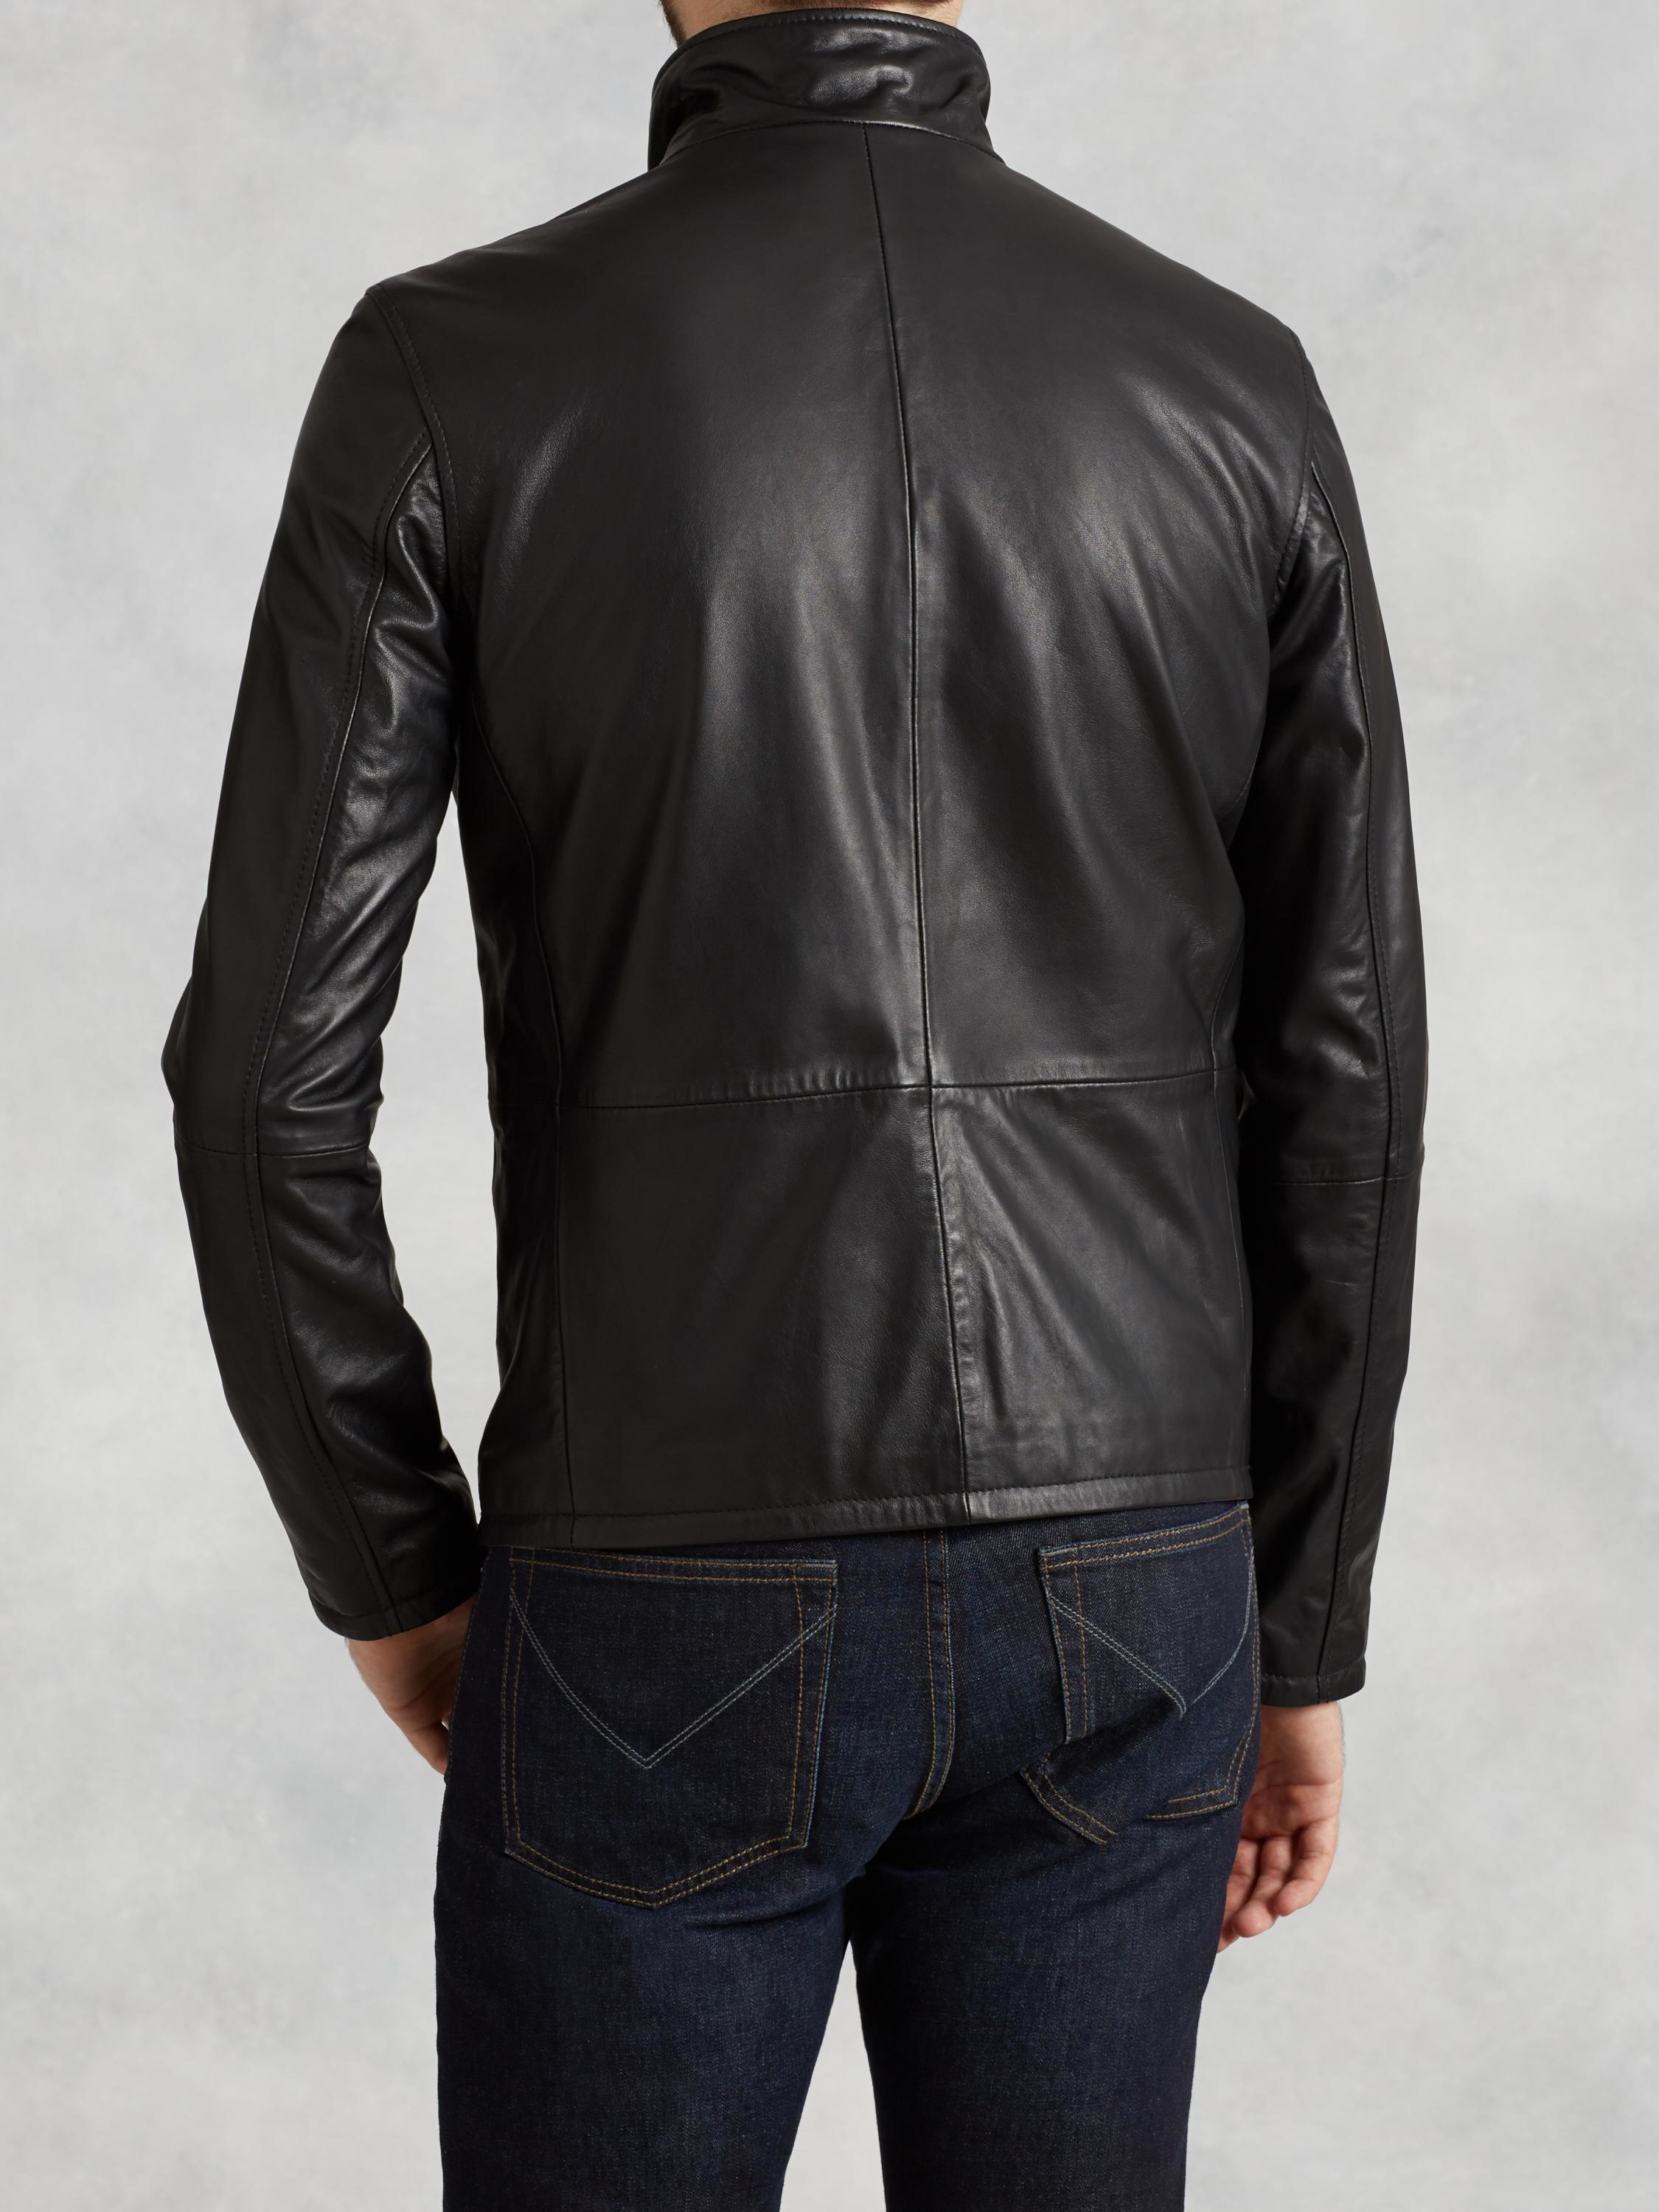 Lyst - John Varvatos Fitted Leather Jacket in Black for Men